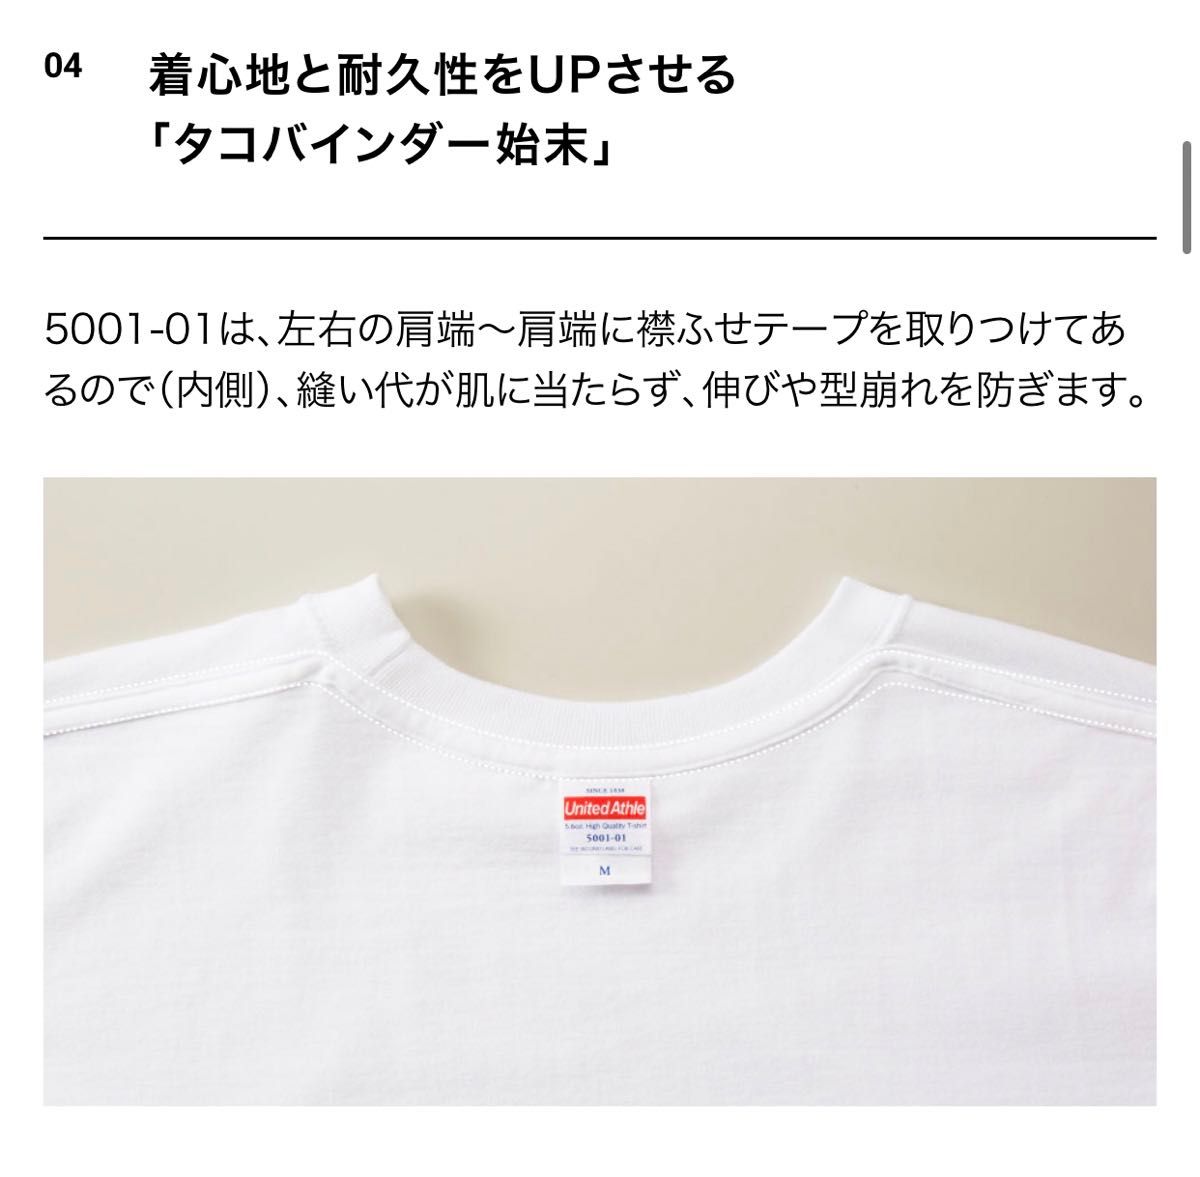 Tシャツ 半袖 5.6オンス ハイクオリティー【5001-01】M ホワイト 綿100%